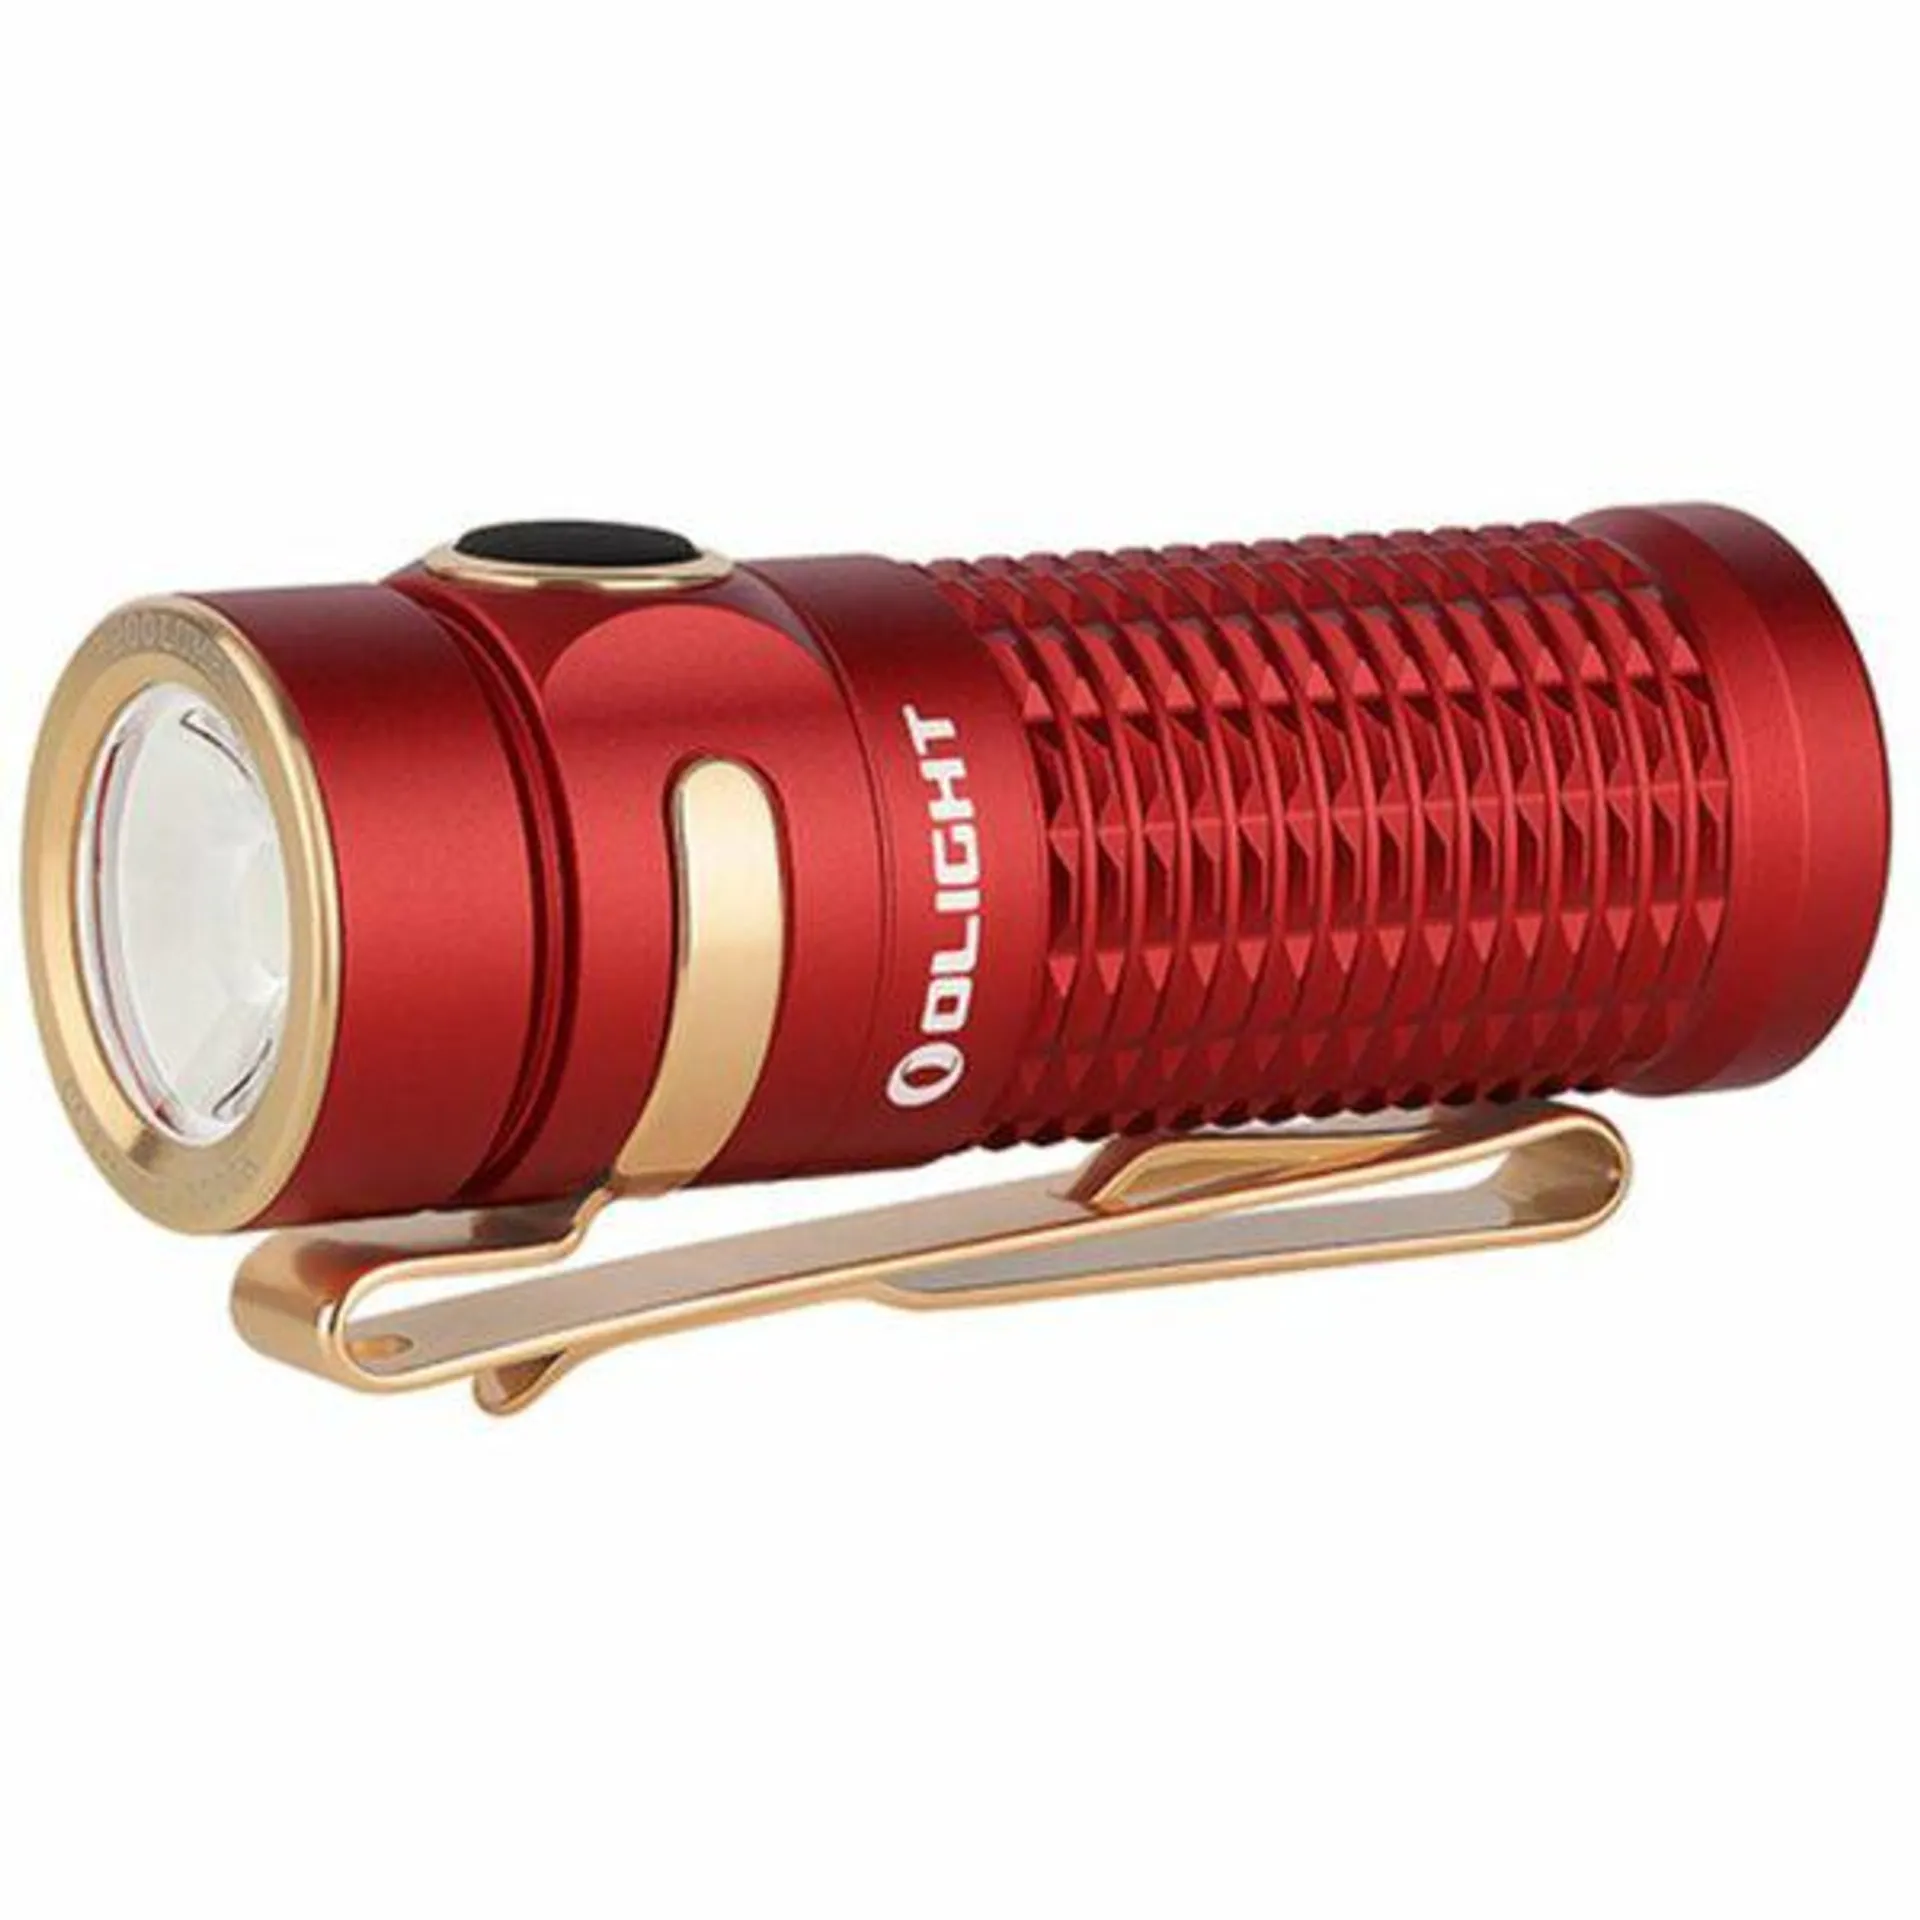 Olight Baton 3 Premium Edition Flashlight – Red